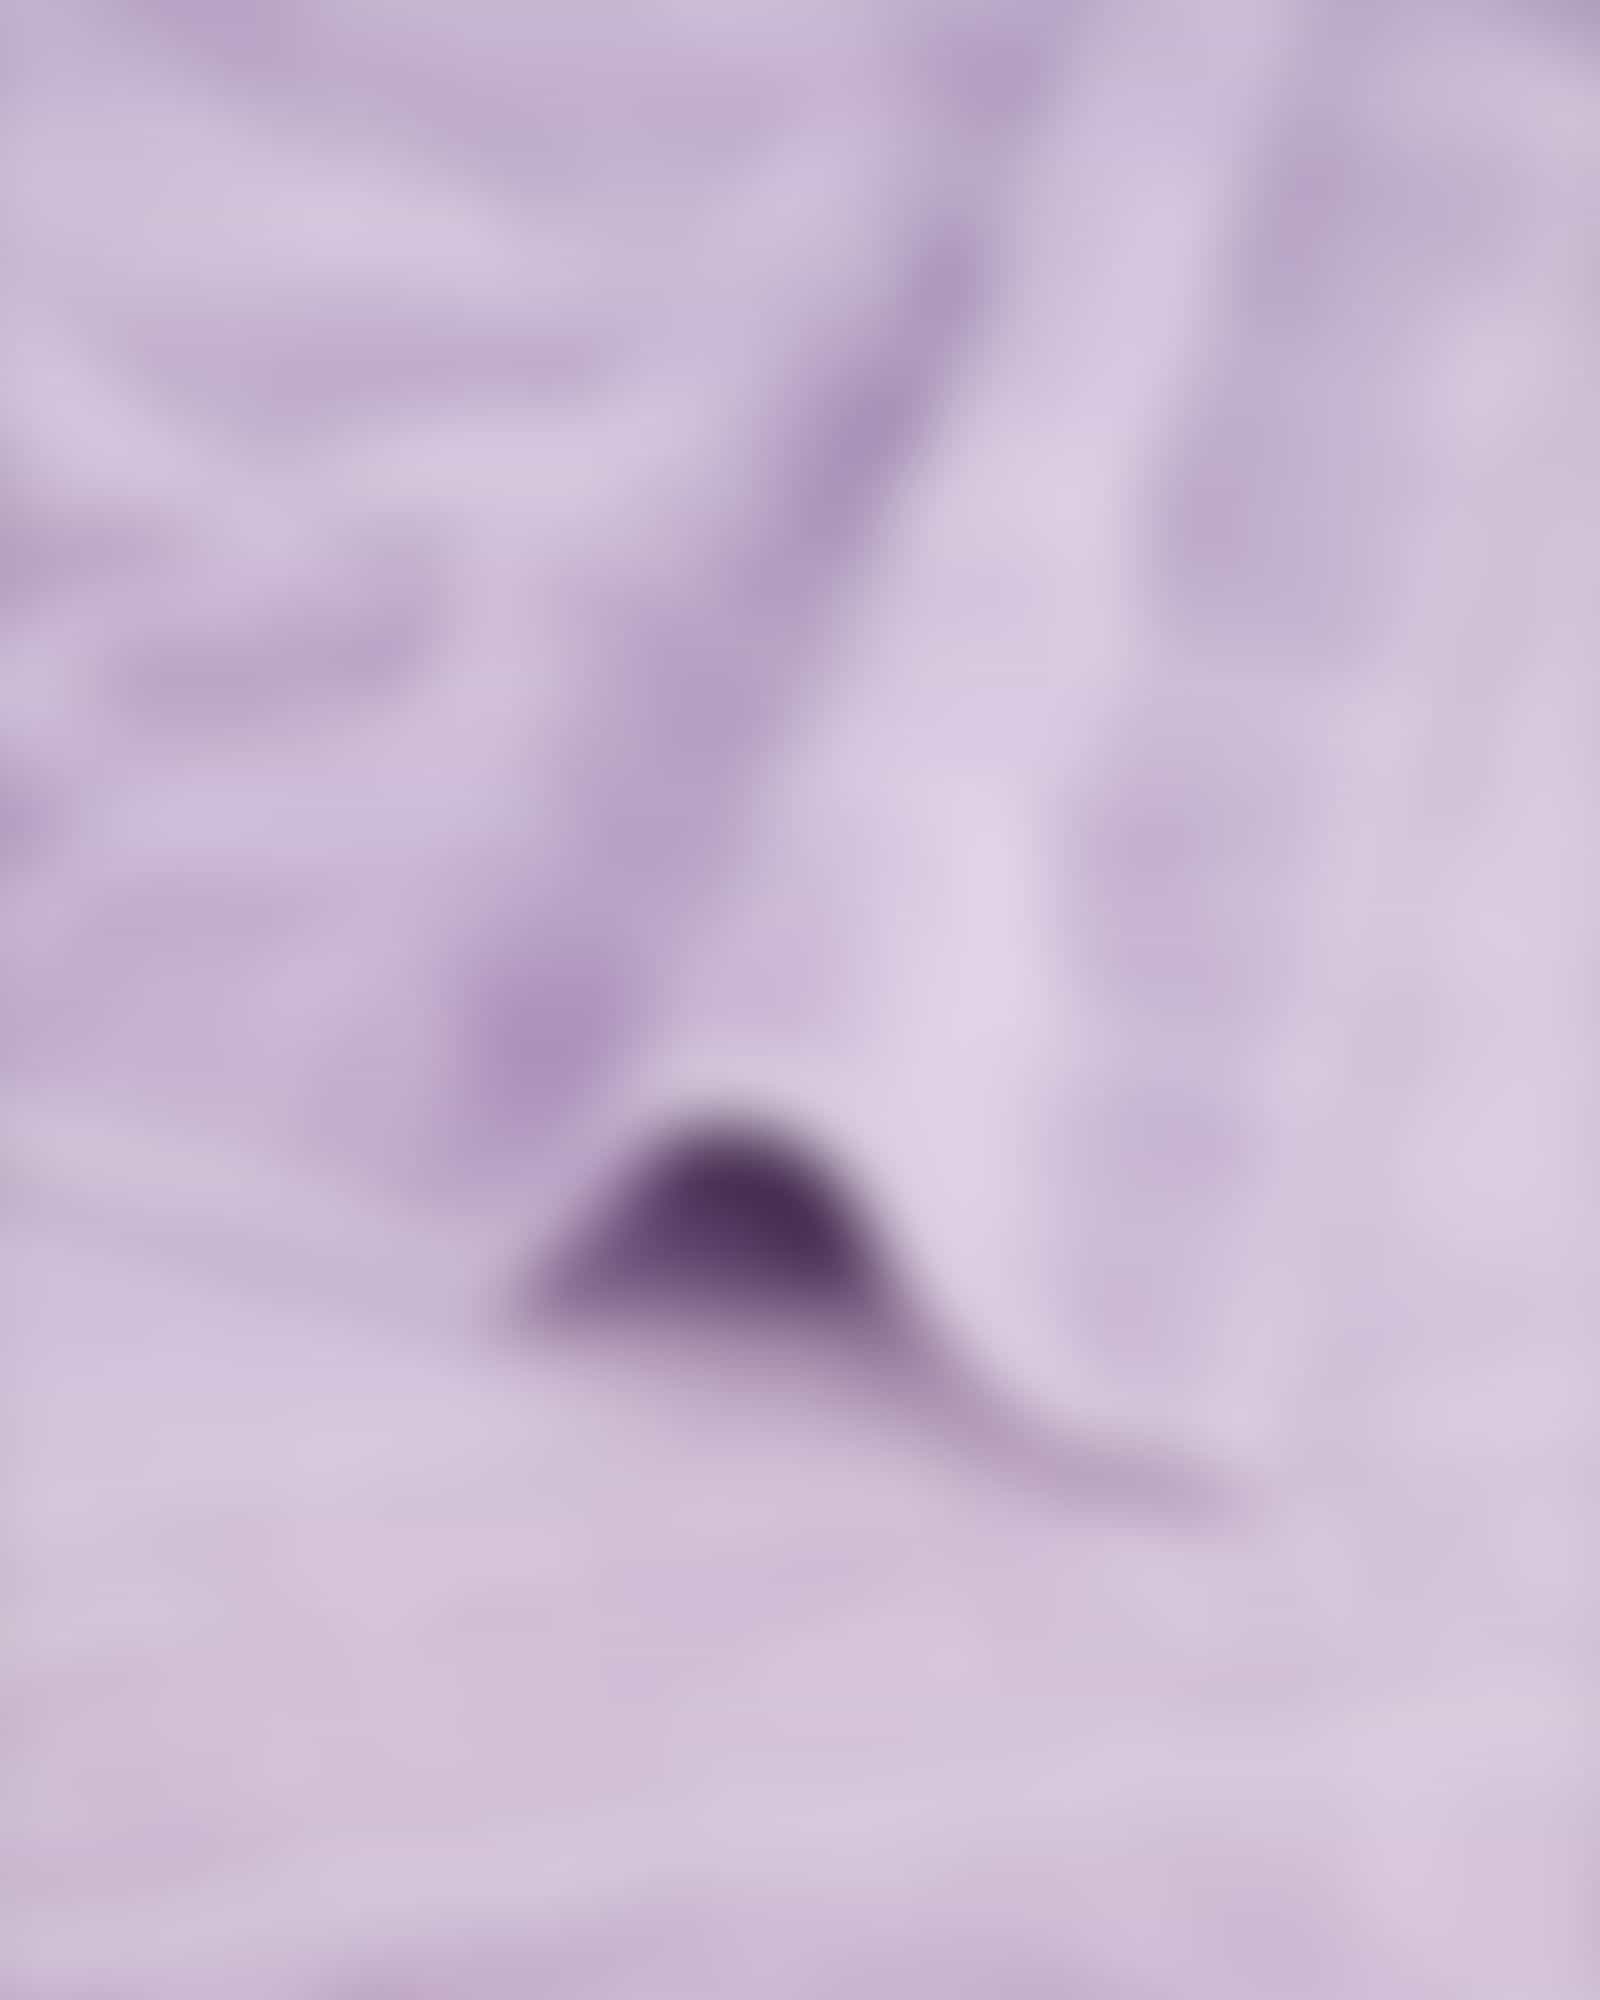 Cawö - Noblesse Uni 1001 - Farbe: lavendel - 806 - Duschtuch 80x160 cm